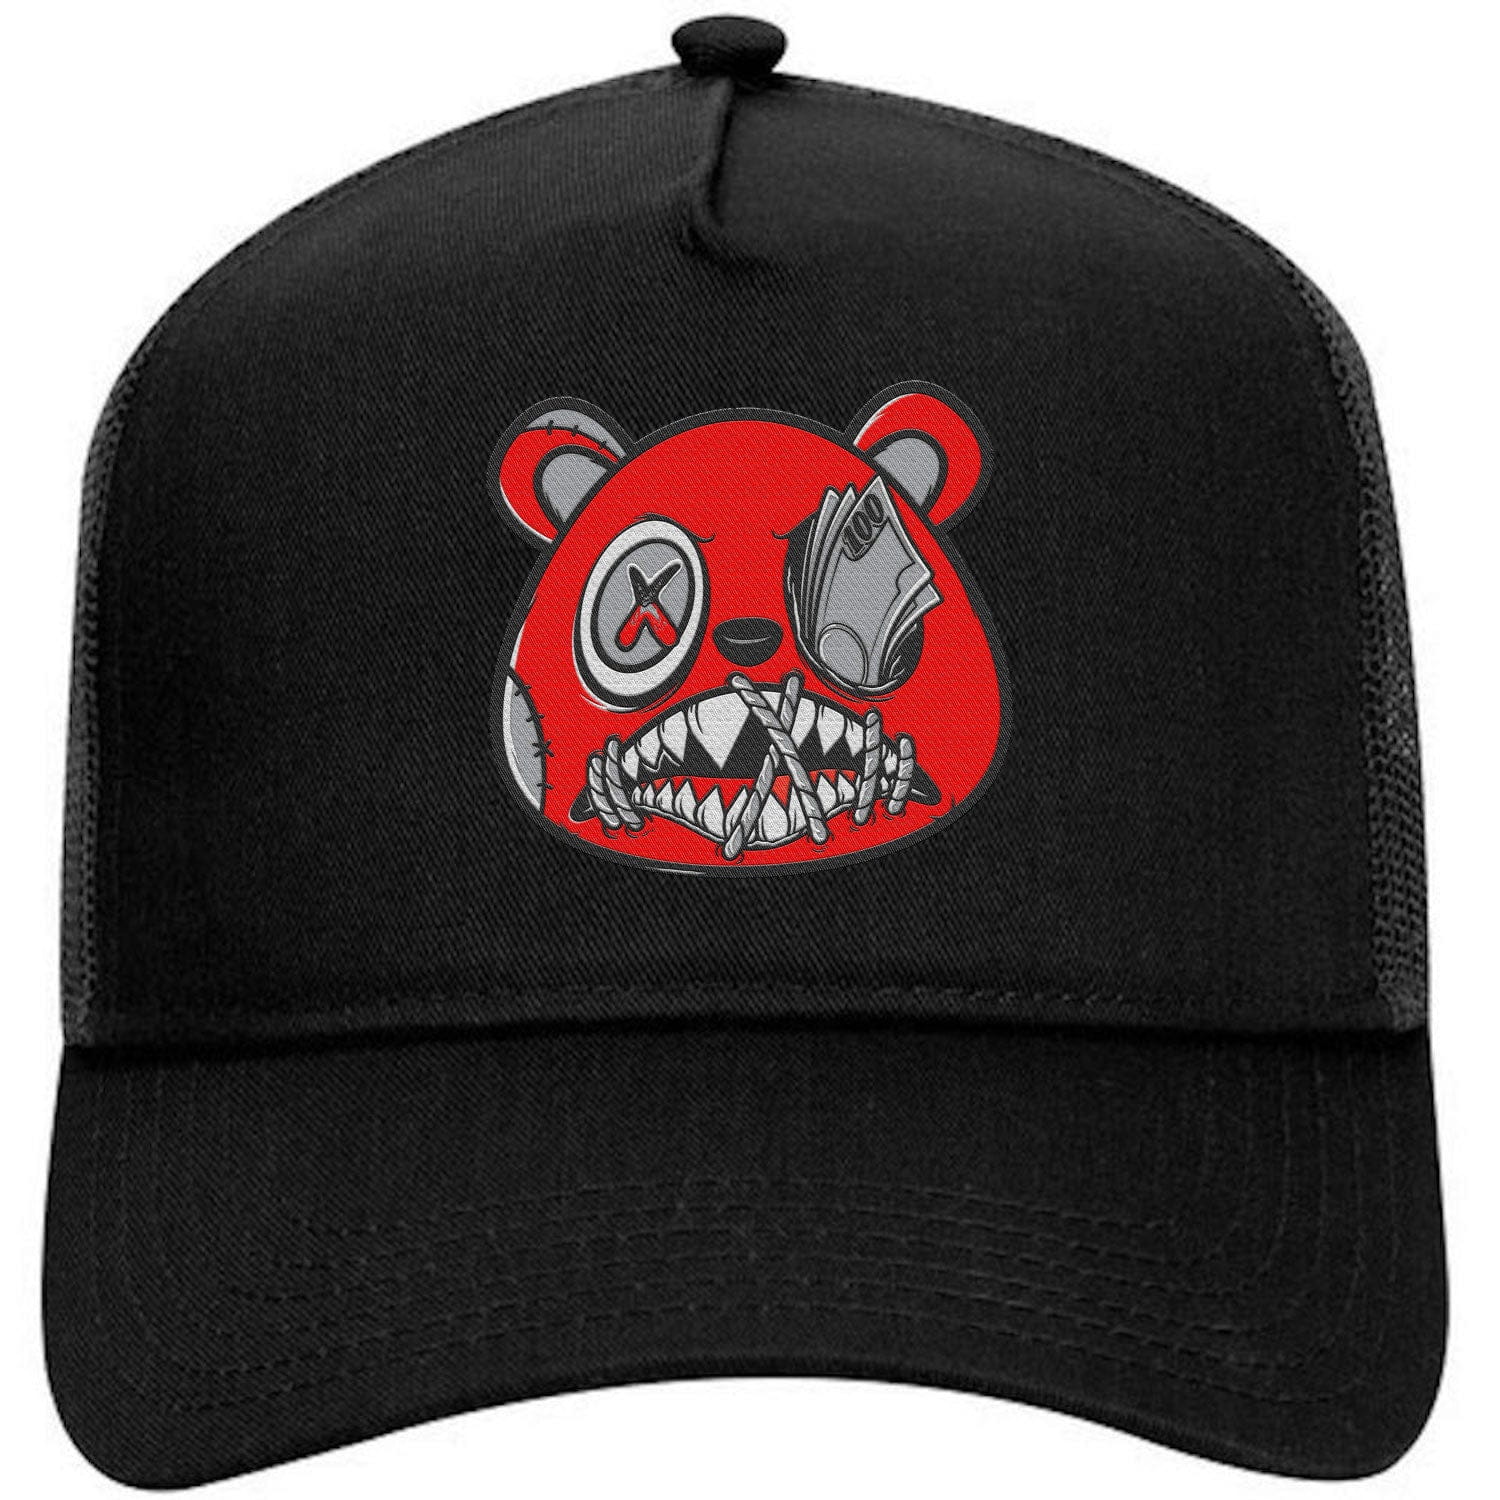 Cherry 12s Trucker Hats - Jordan 12 Cherry Hats - Money Talks